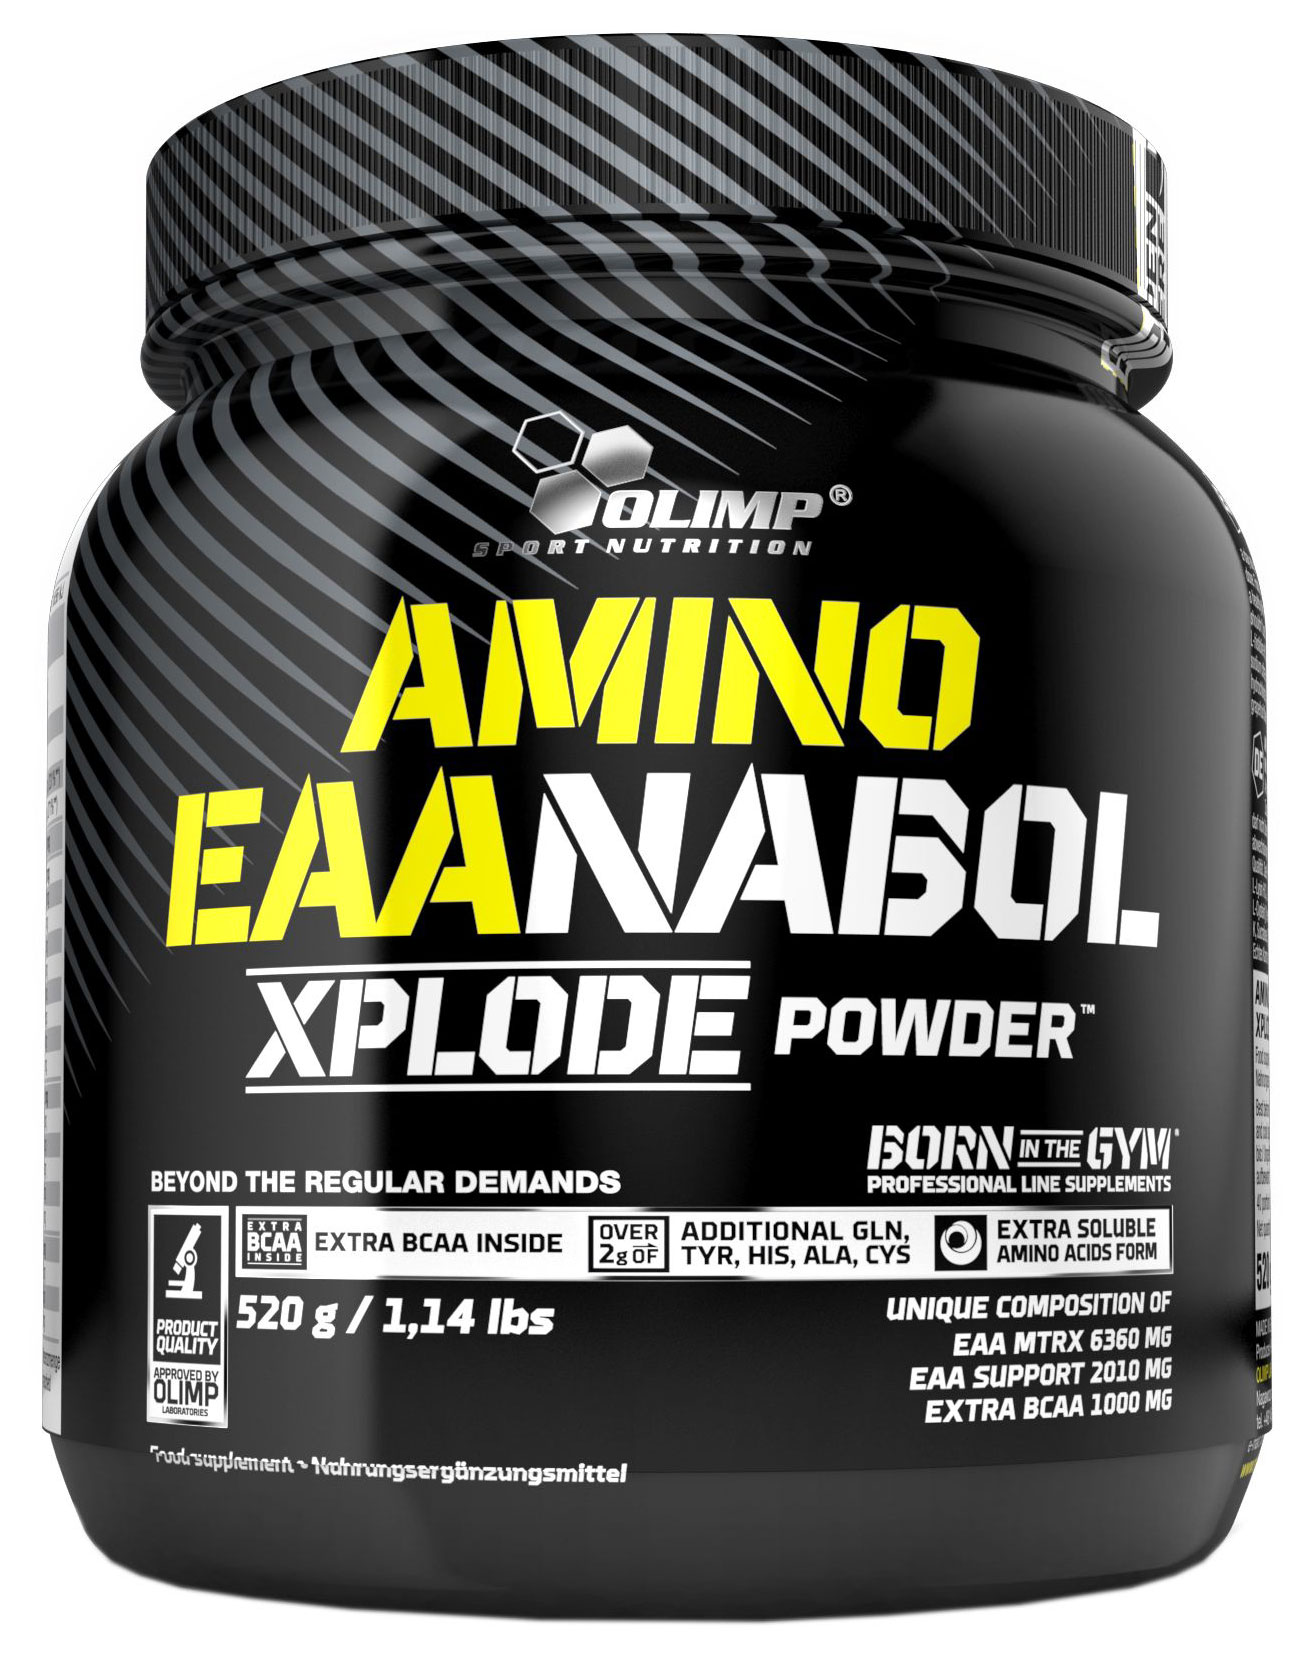 Amino EAAnabol Xplode Powder Olimp, 520 г, peach ice tea